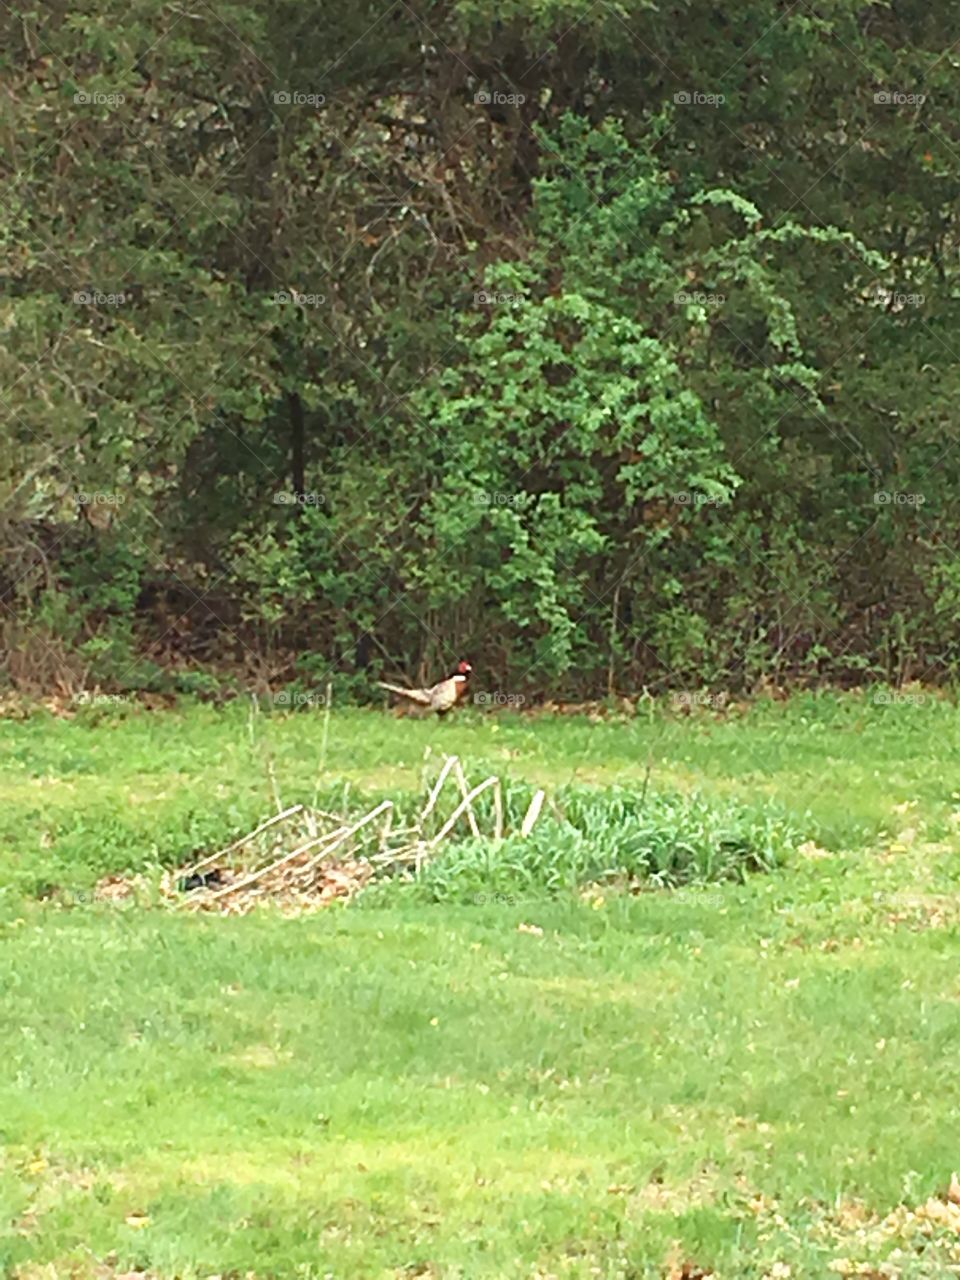 Our backyard neighbor, me. Pheasant 